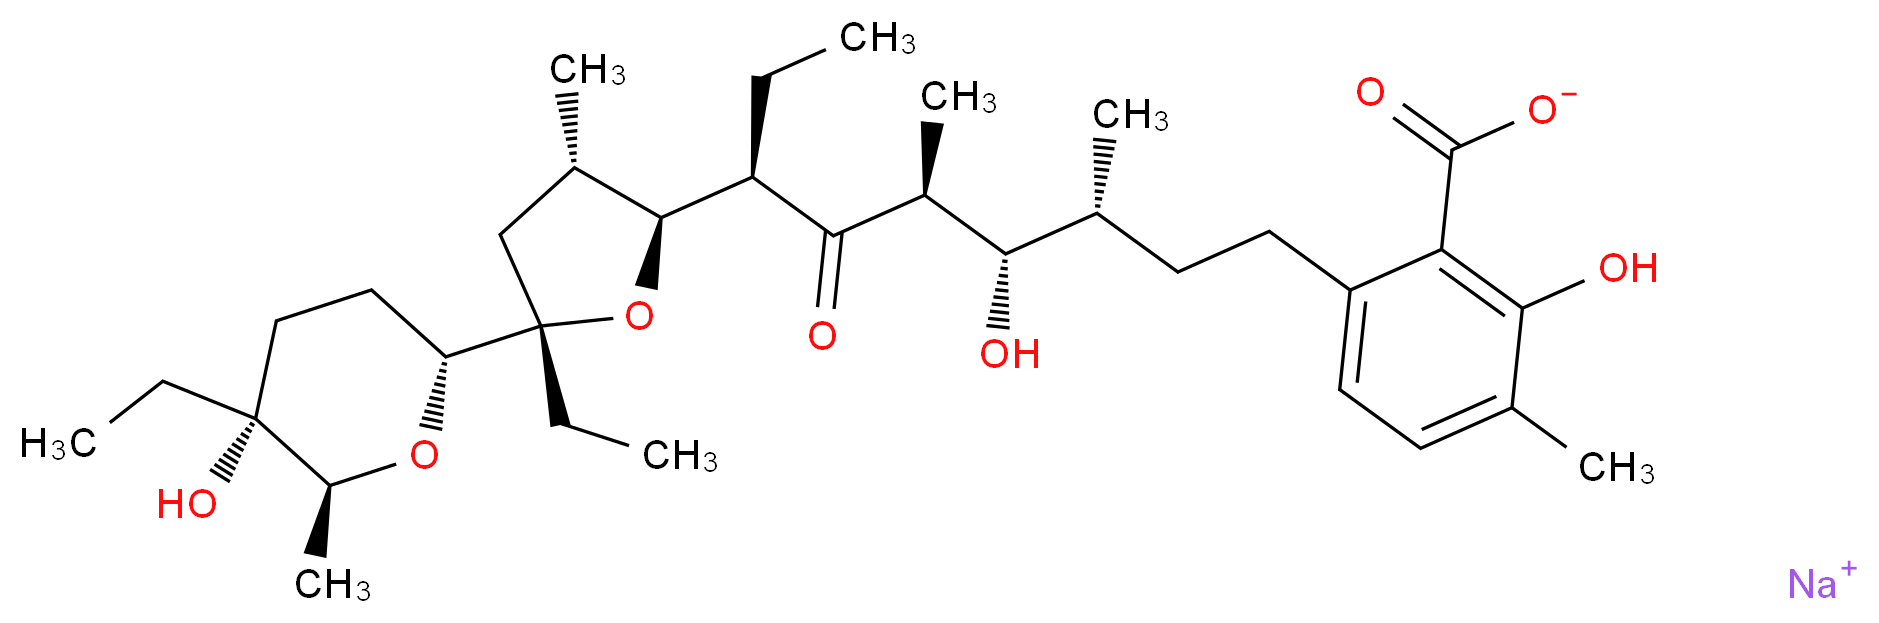 Lasalocid A sodium salt solution_Molecular_structure_CAS_25999-20-6)